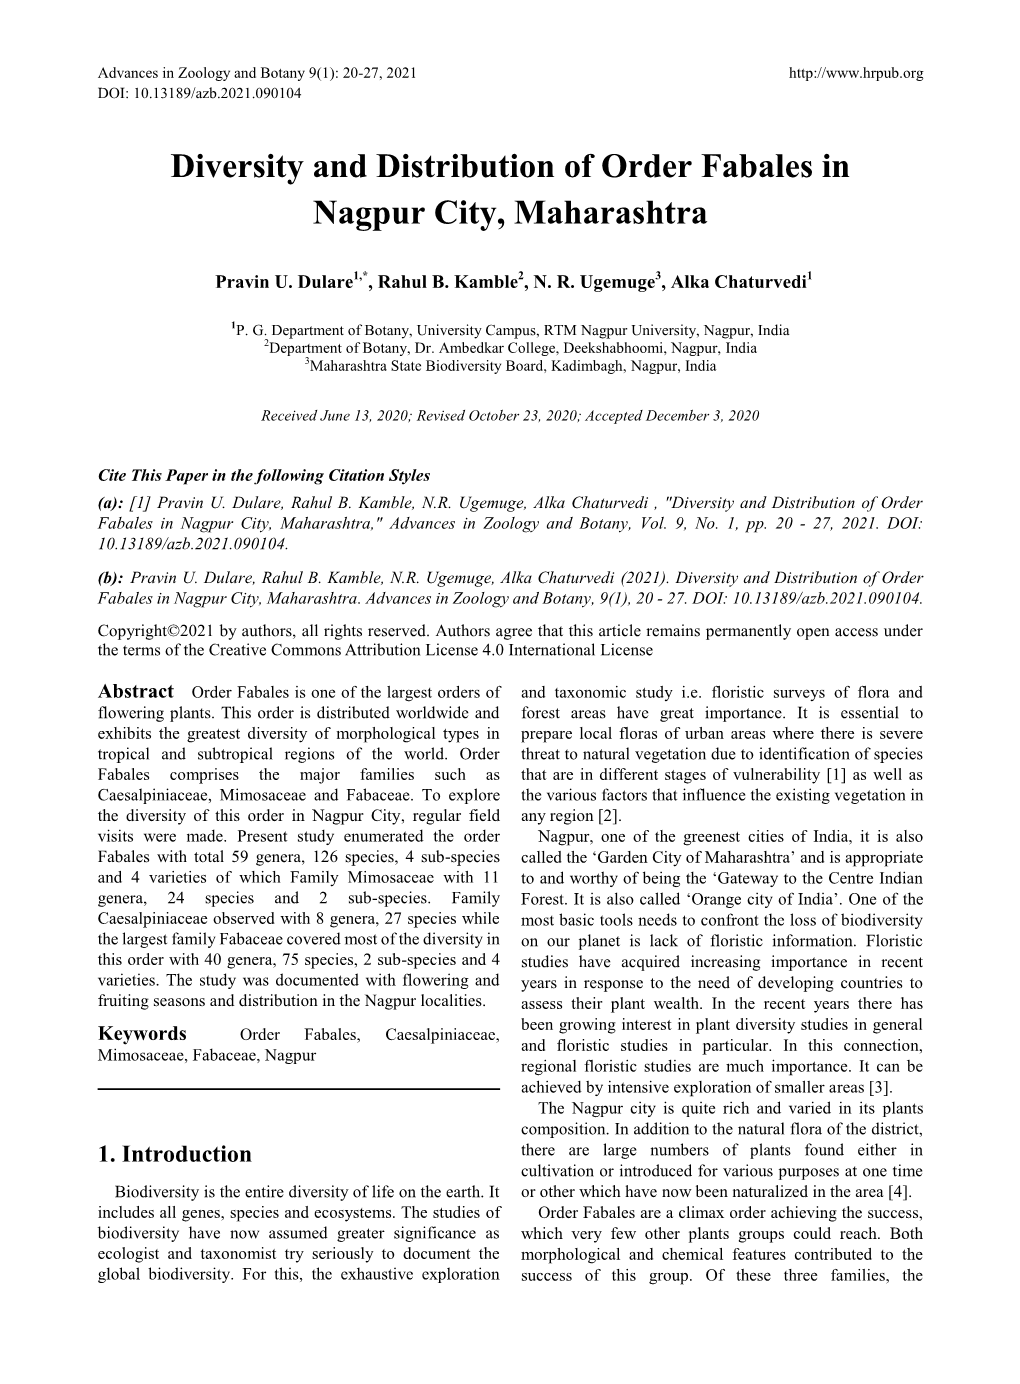 Diversity and Distribution of Order Fabales in Nagpur City, Maharashtra